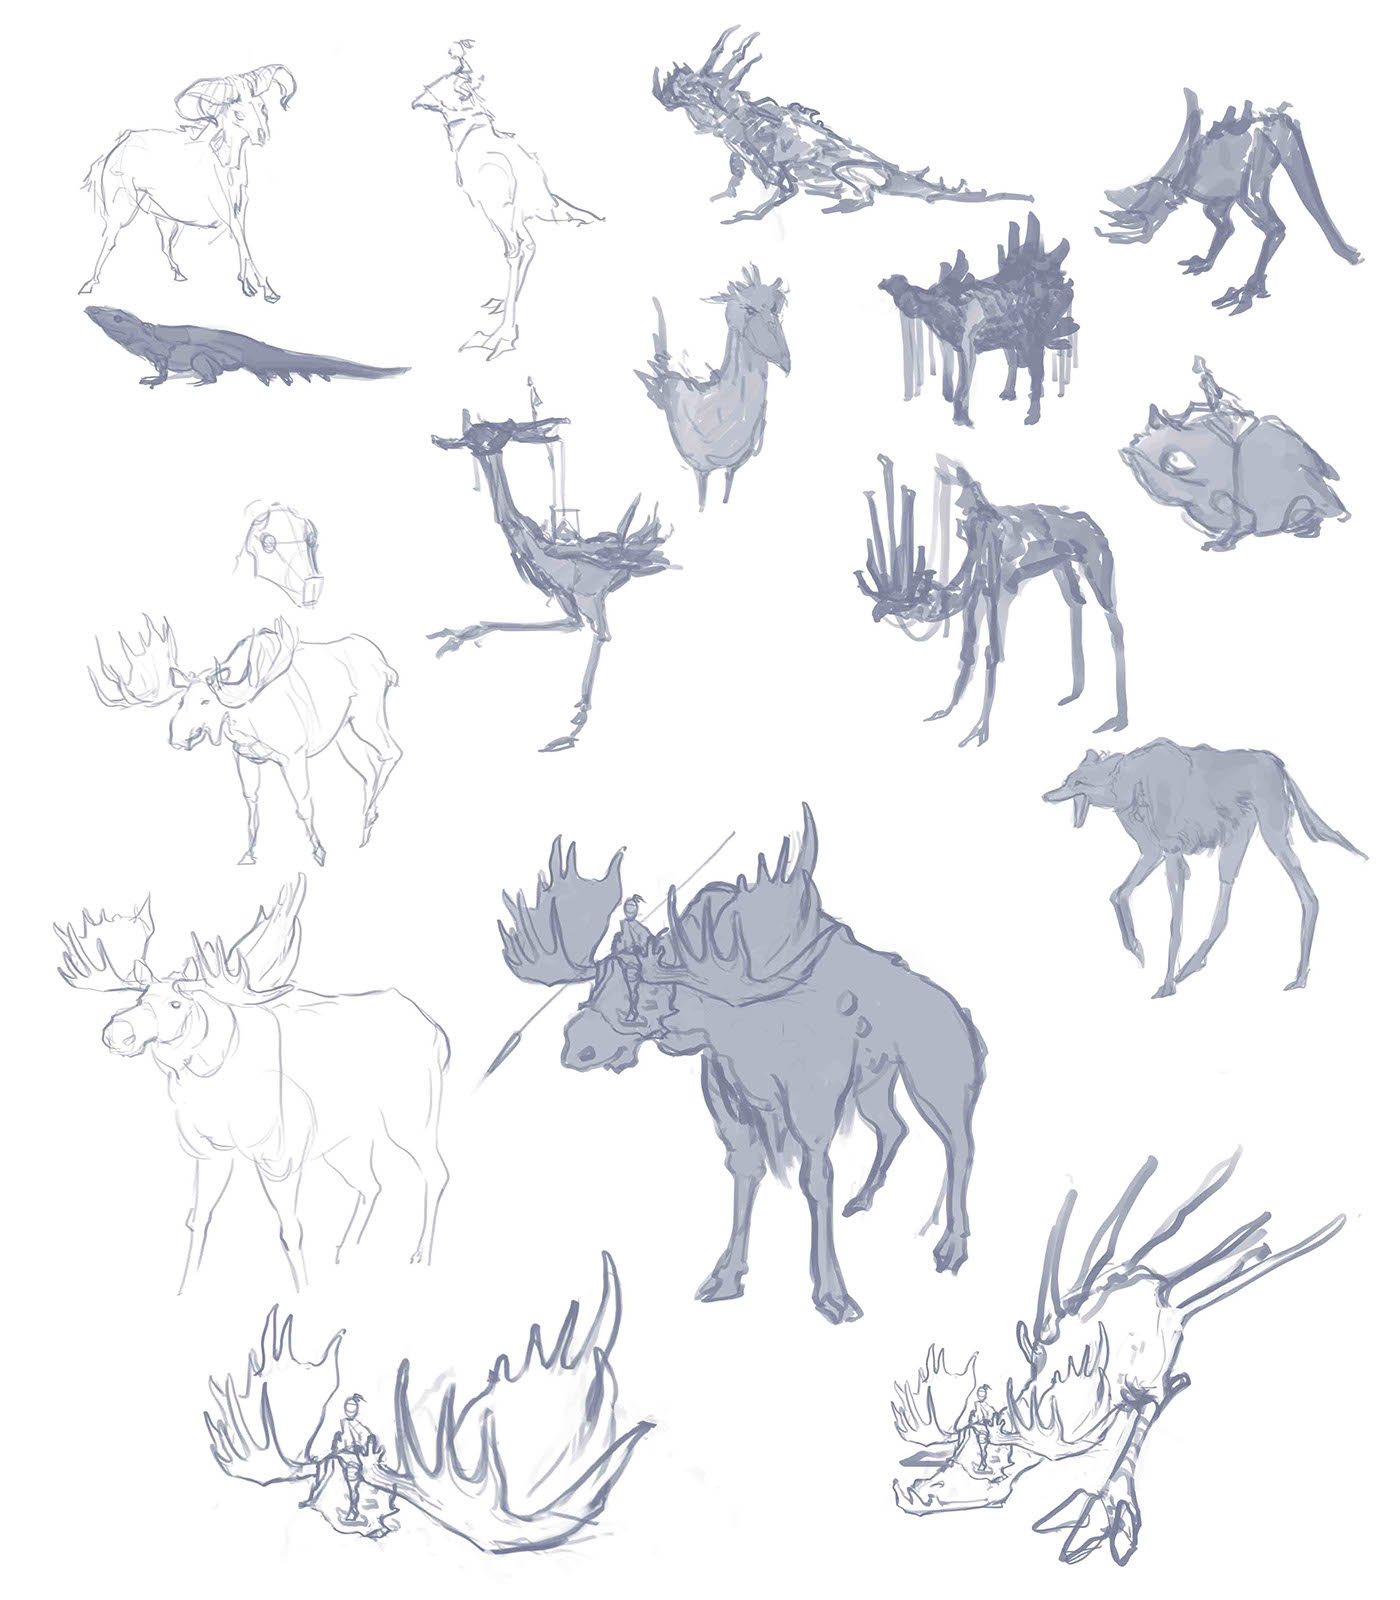 moose rider mount swamp ILLUSTRATION  concept art Visual Development digital illustration antlers marsh